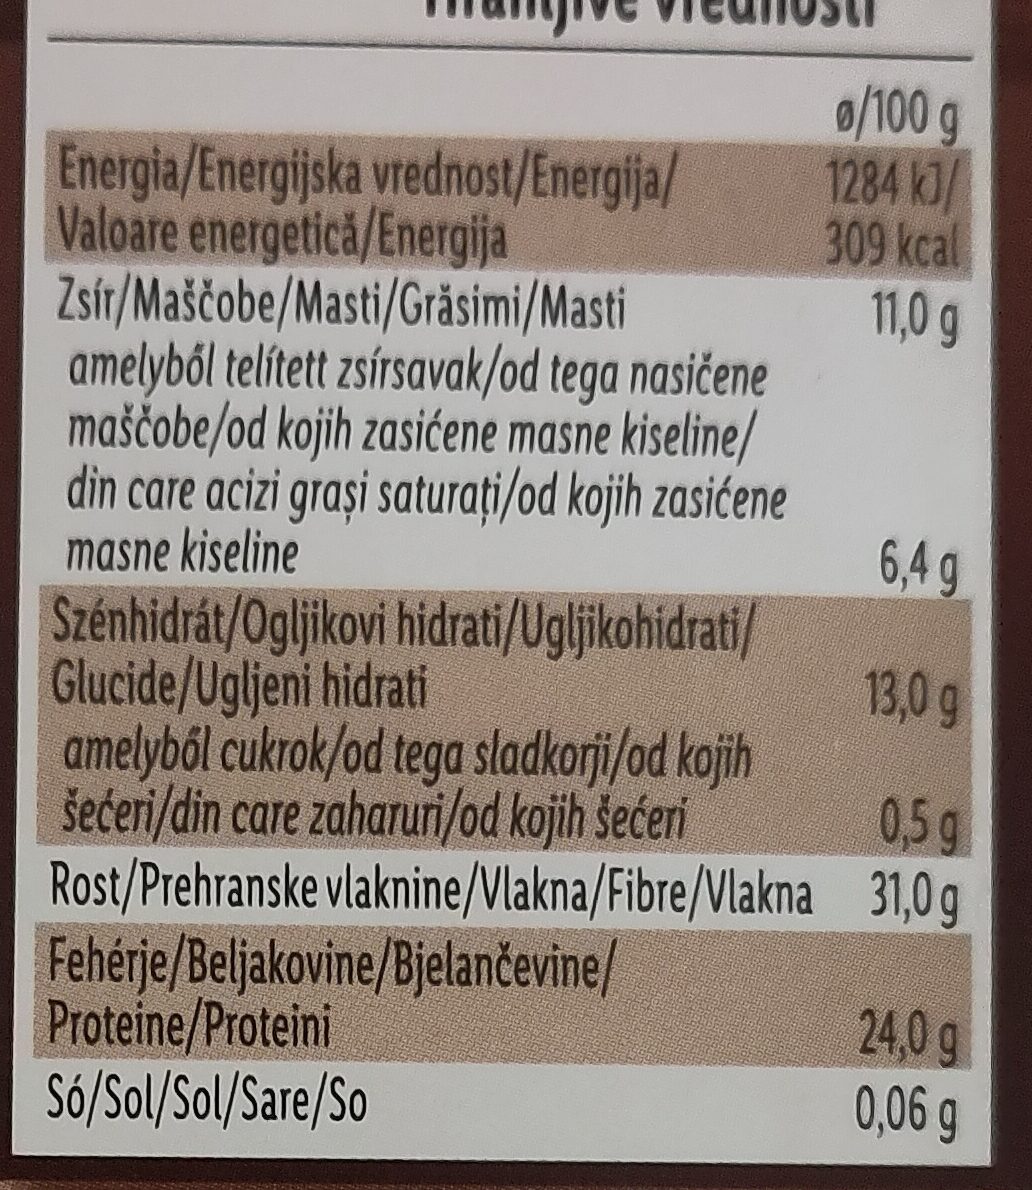 fat reduced cocoa powder - Nährwertangaben - hr